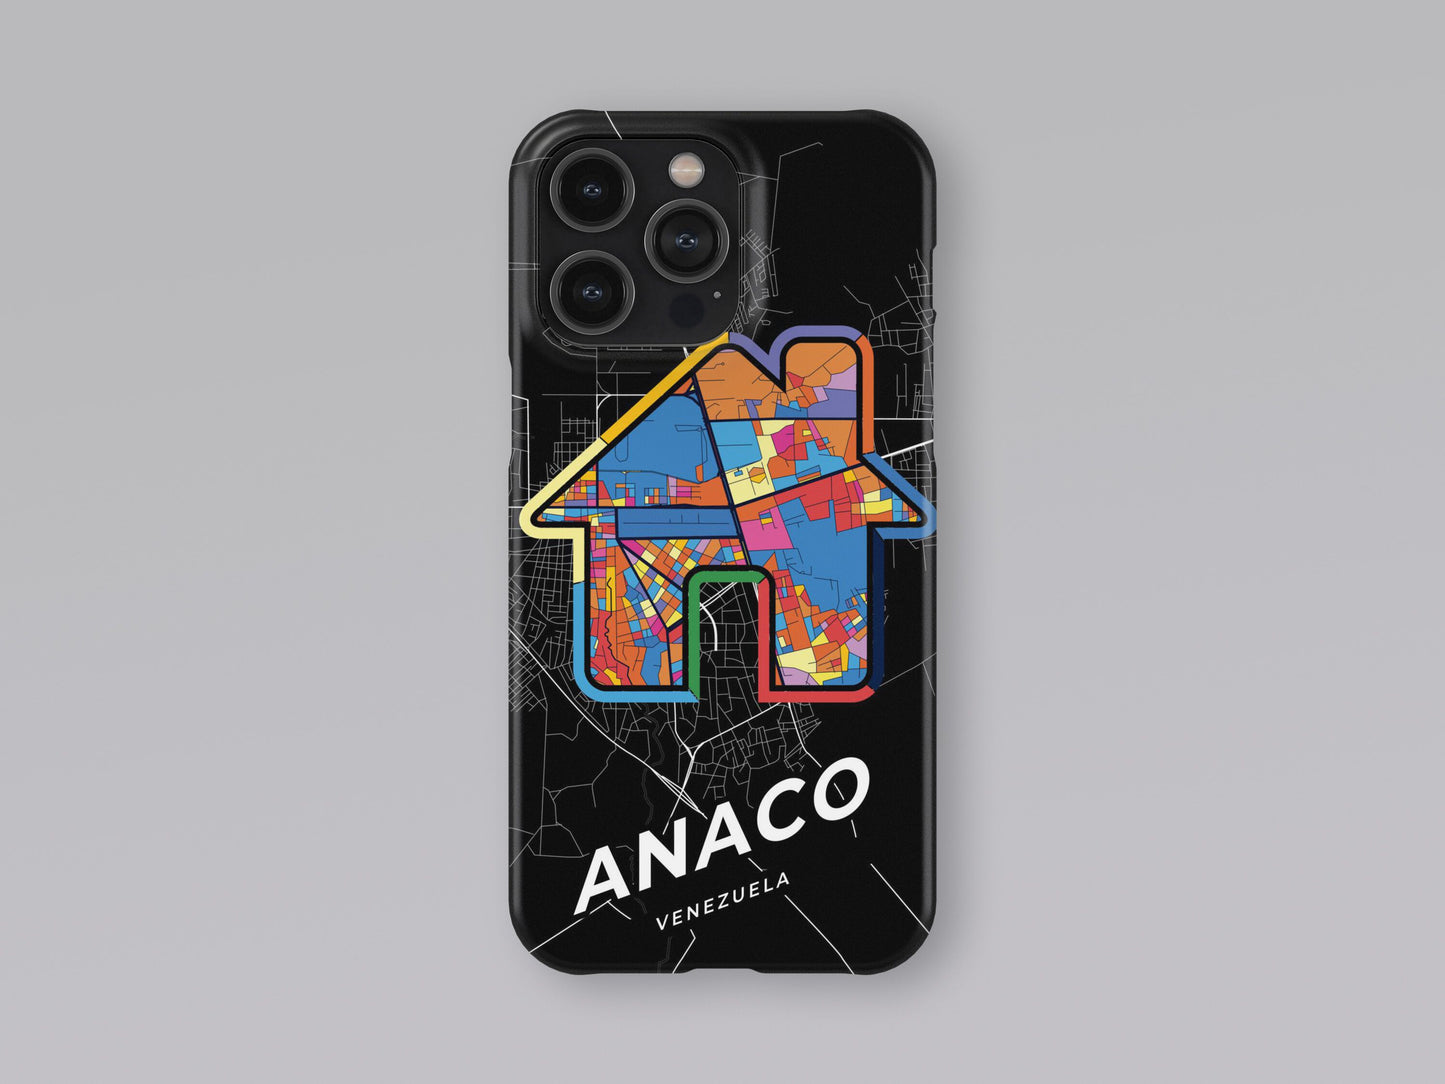 Anaco Venezuela slim phone case with colorful icon. Birthday, wedding or housewarming gift. Couple match cases. 3